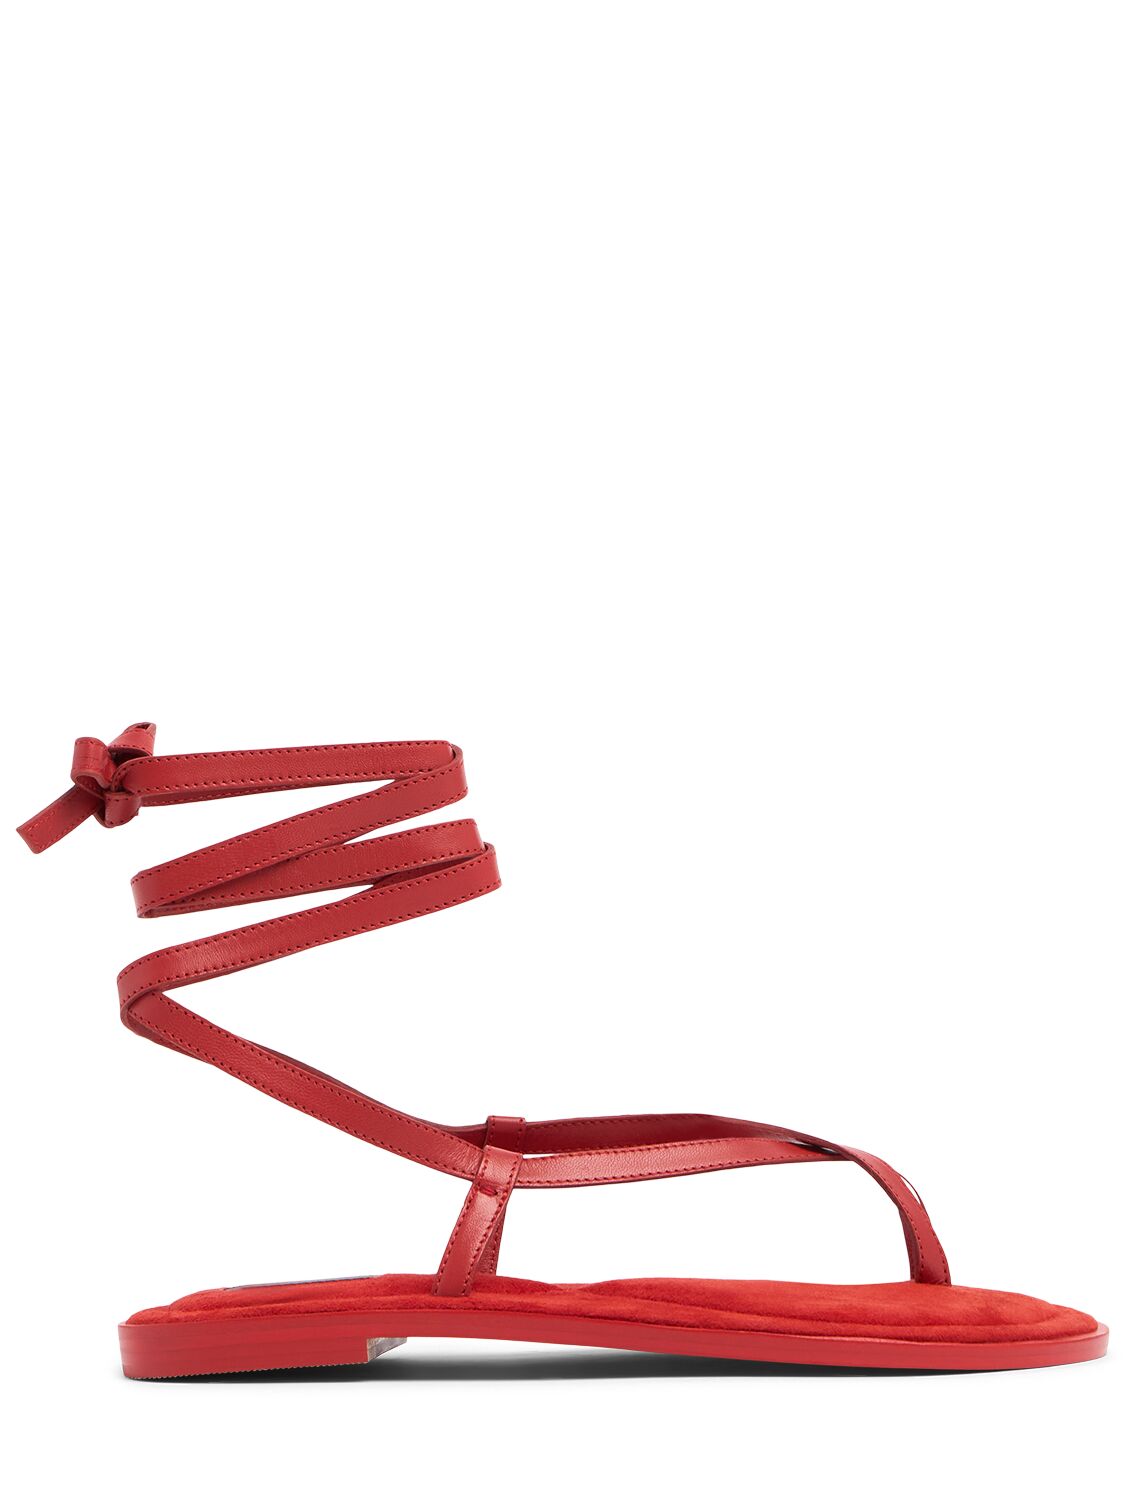 A.emery 10毫米elliot麂皮凉鞋 In Red